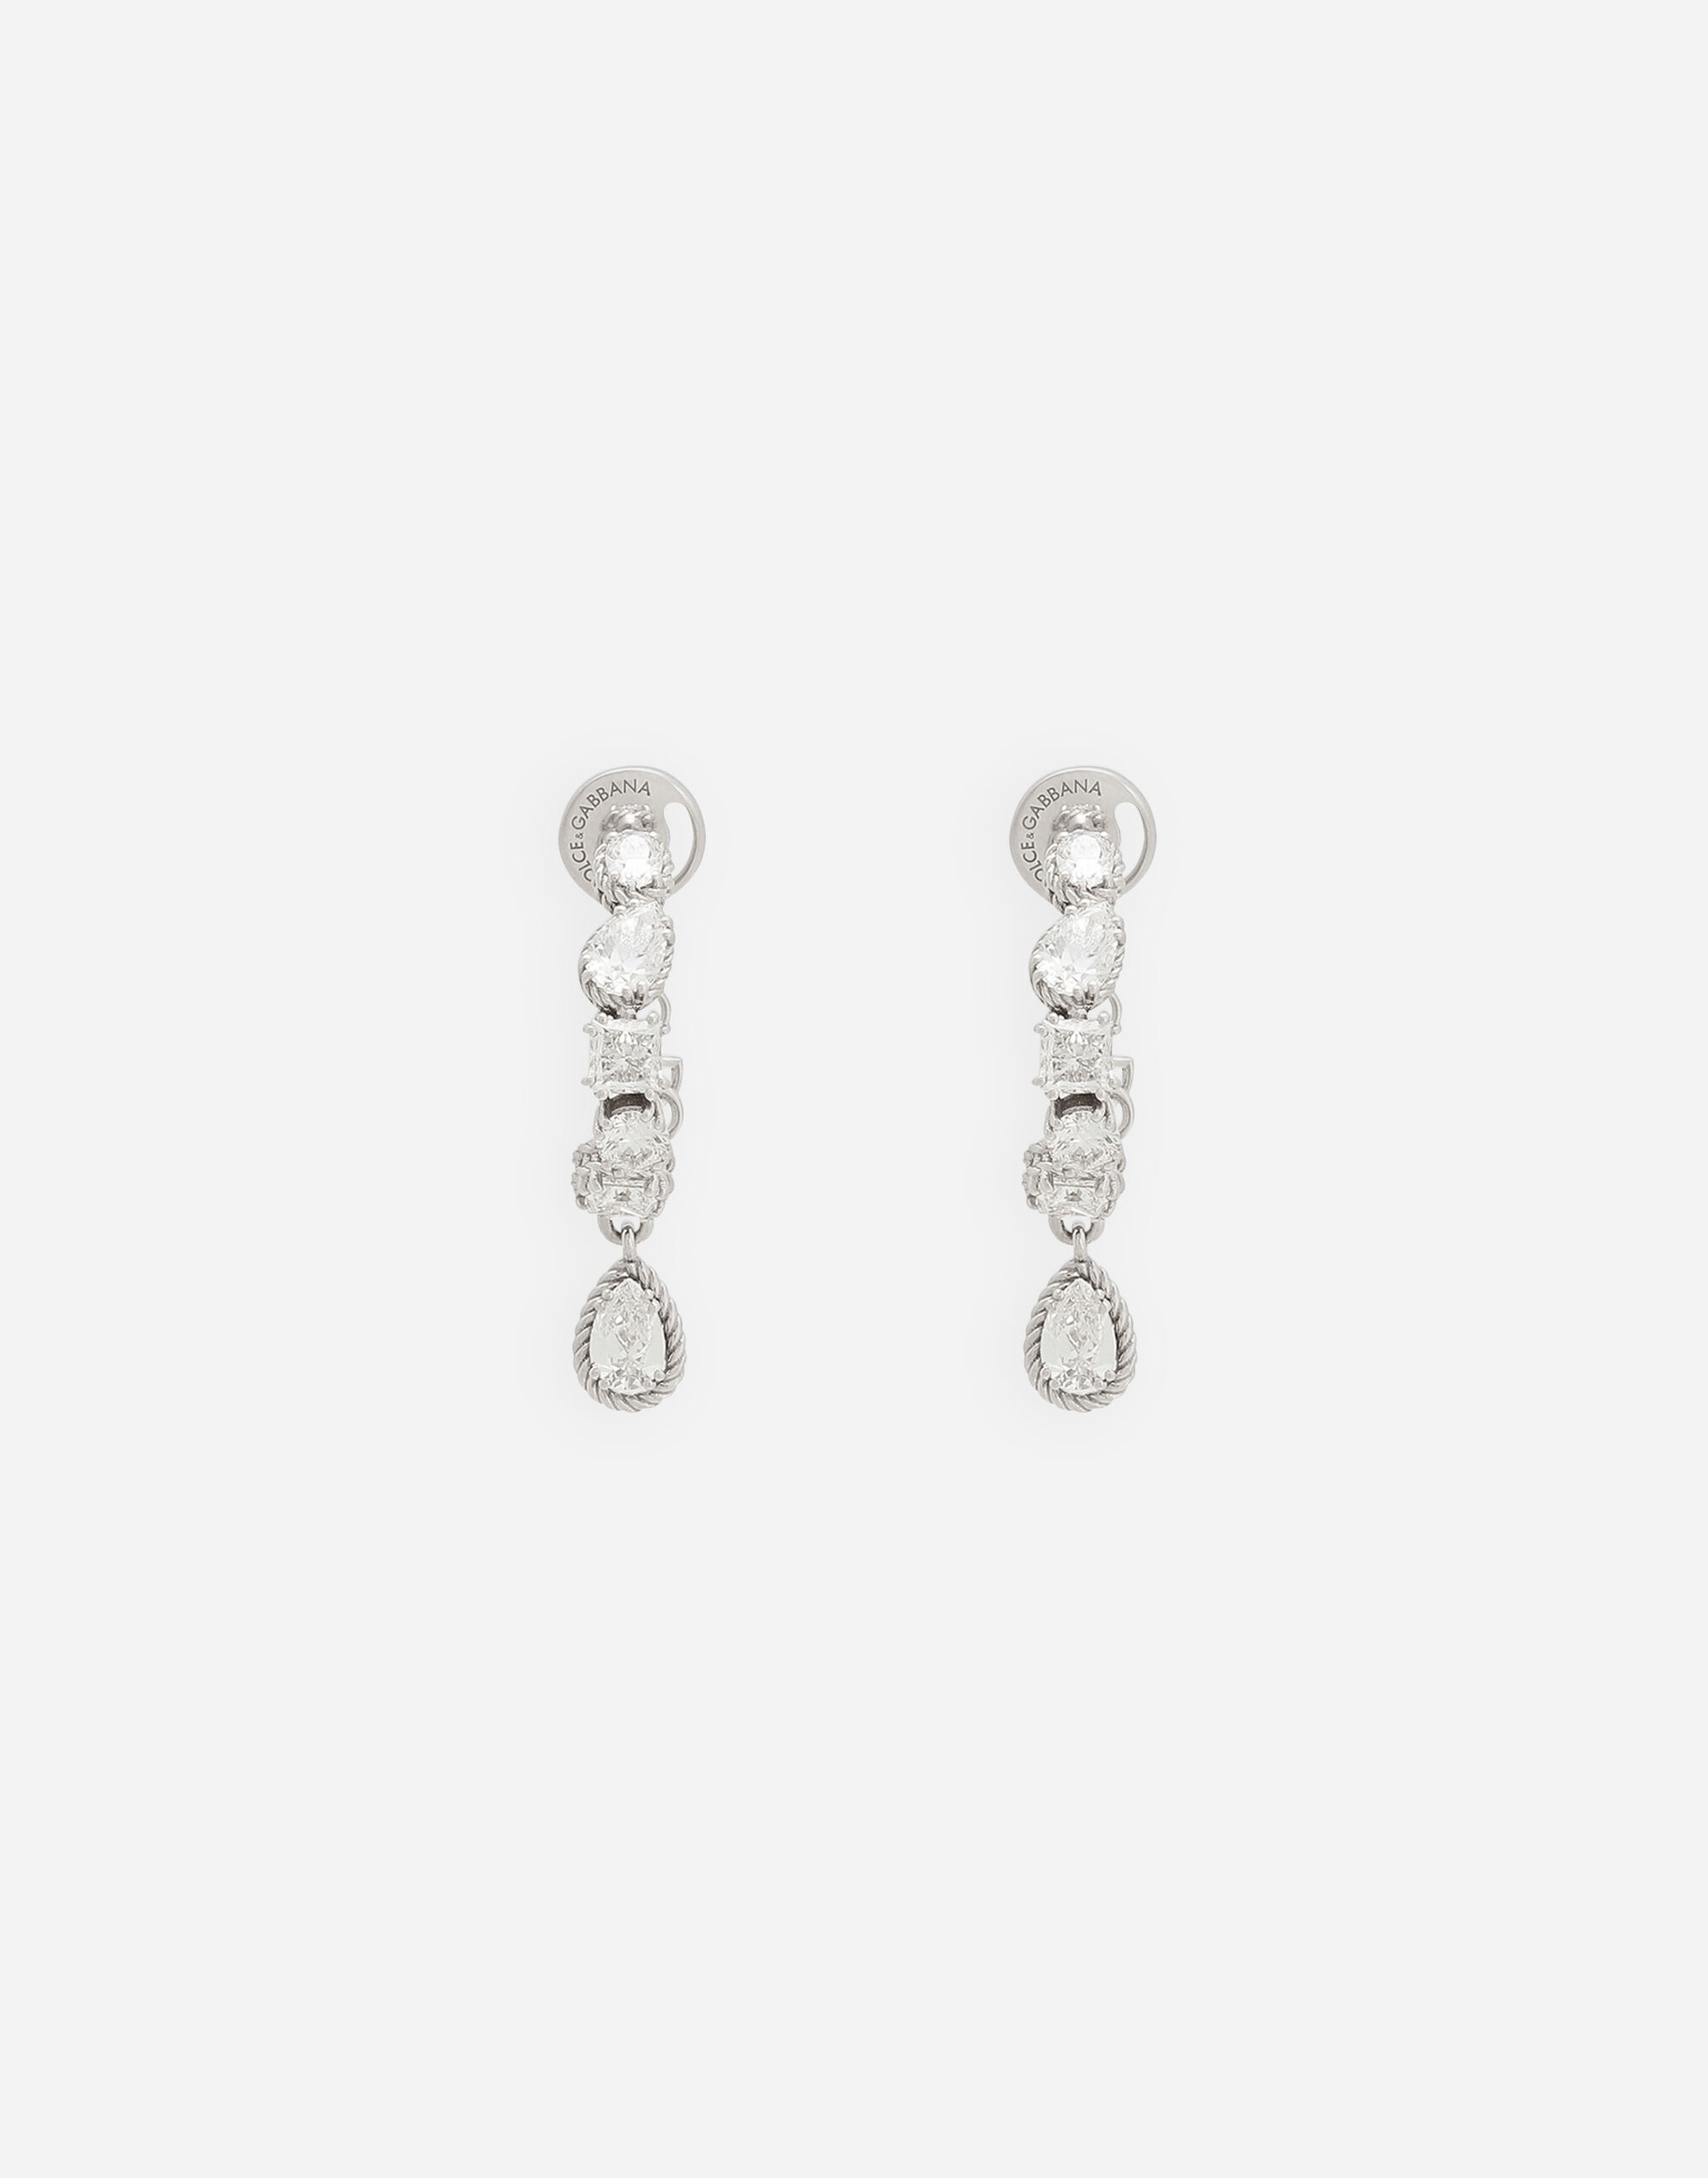 Easy Diamond earrings in white gold 18Kt and diamonds - 1